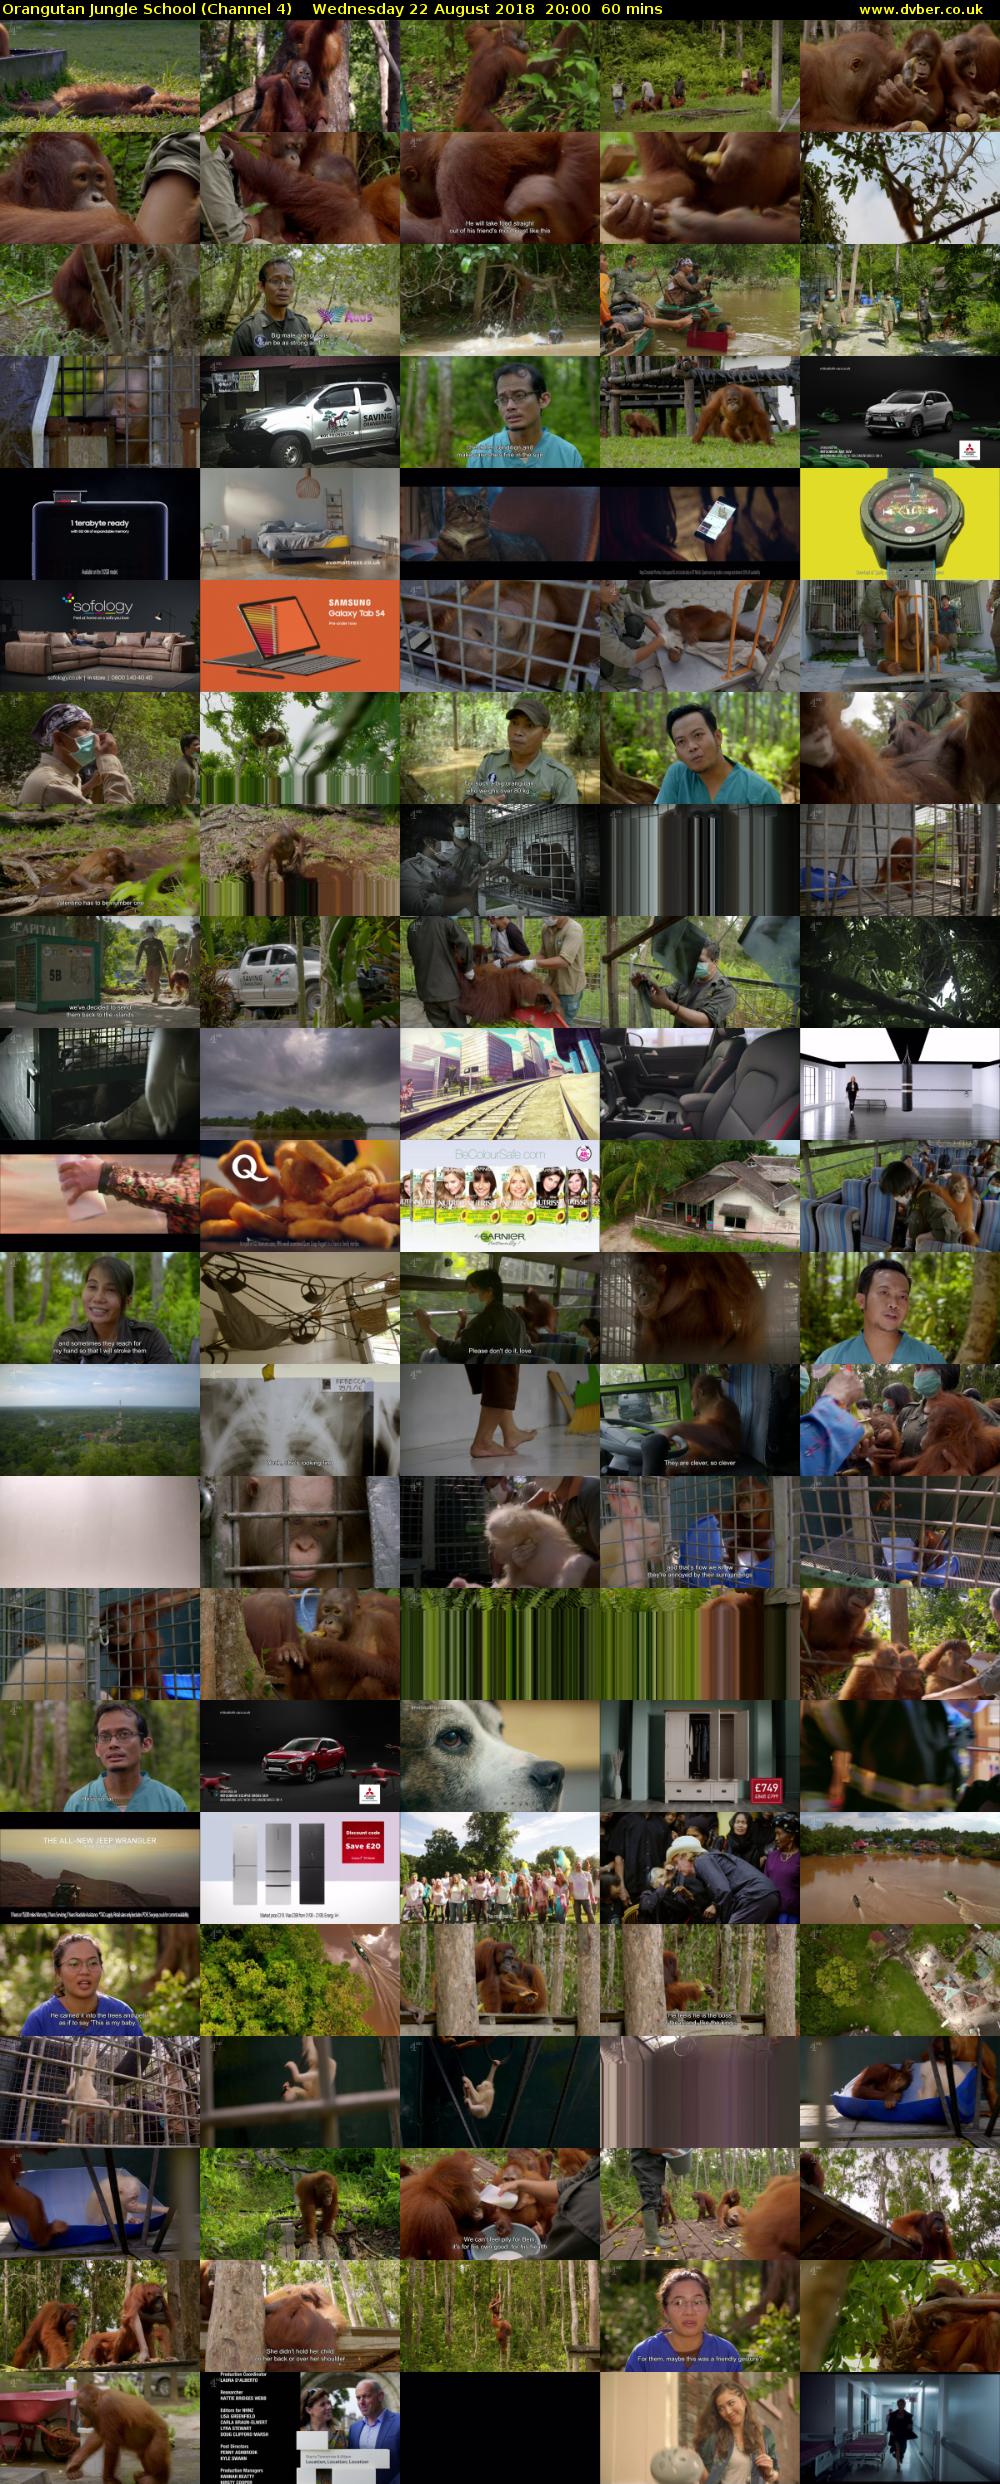 Orangutan Jungle School (Channel 4) Wednesday 22 August 2018 20:00 - 21:00